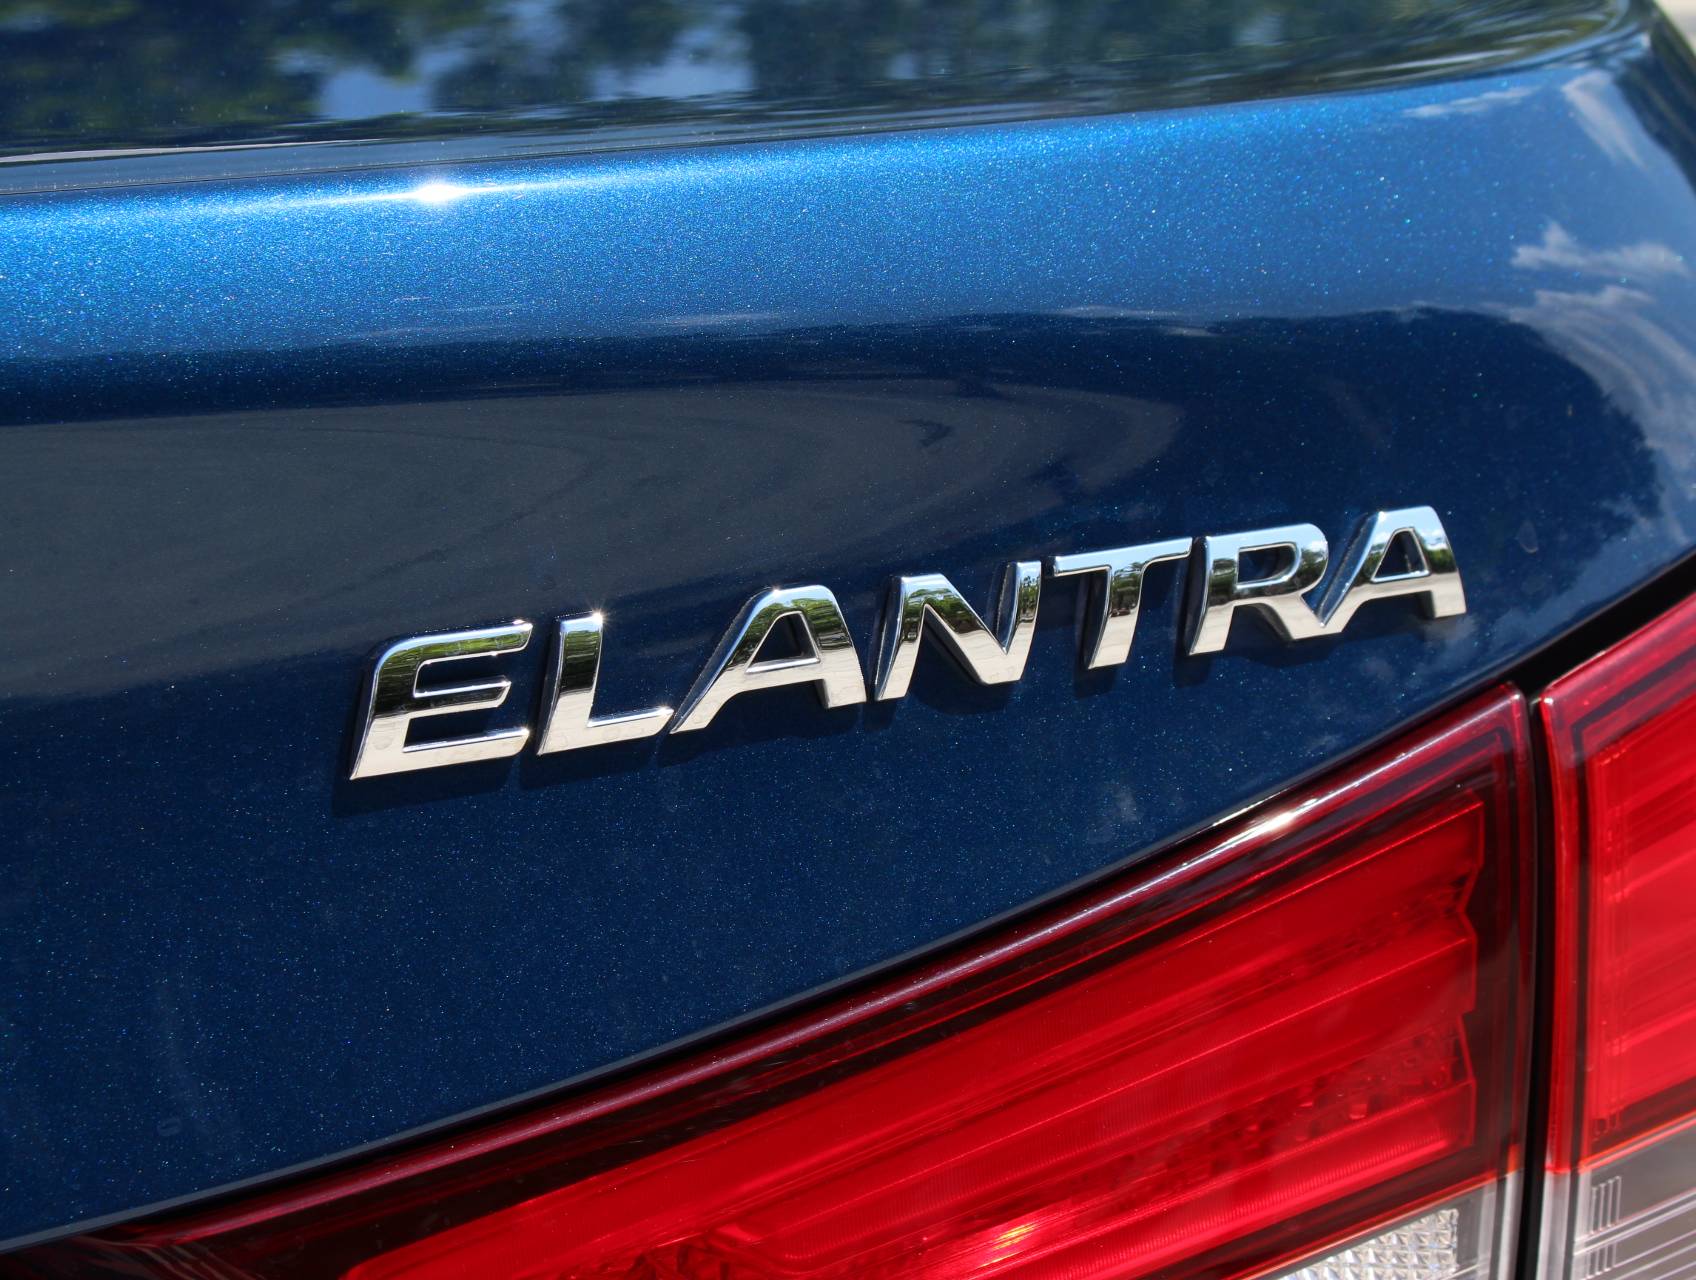 Florida Fine Cars - Used HYUNDAI ELANTRA 2016 MARGATE Value Edition